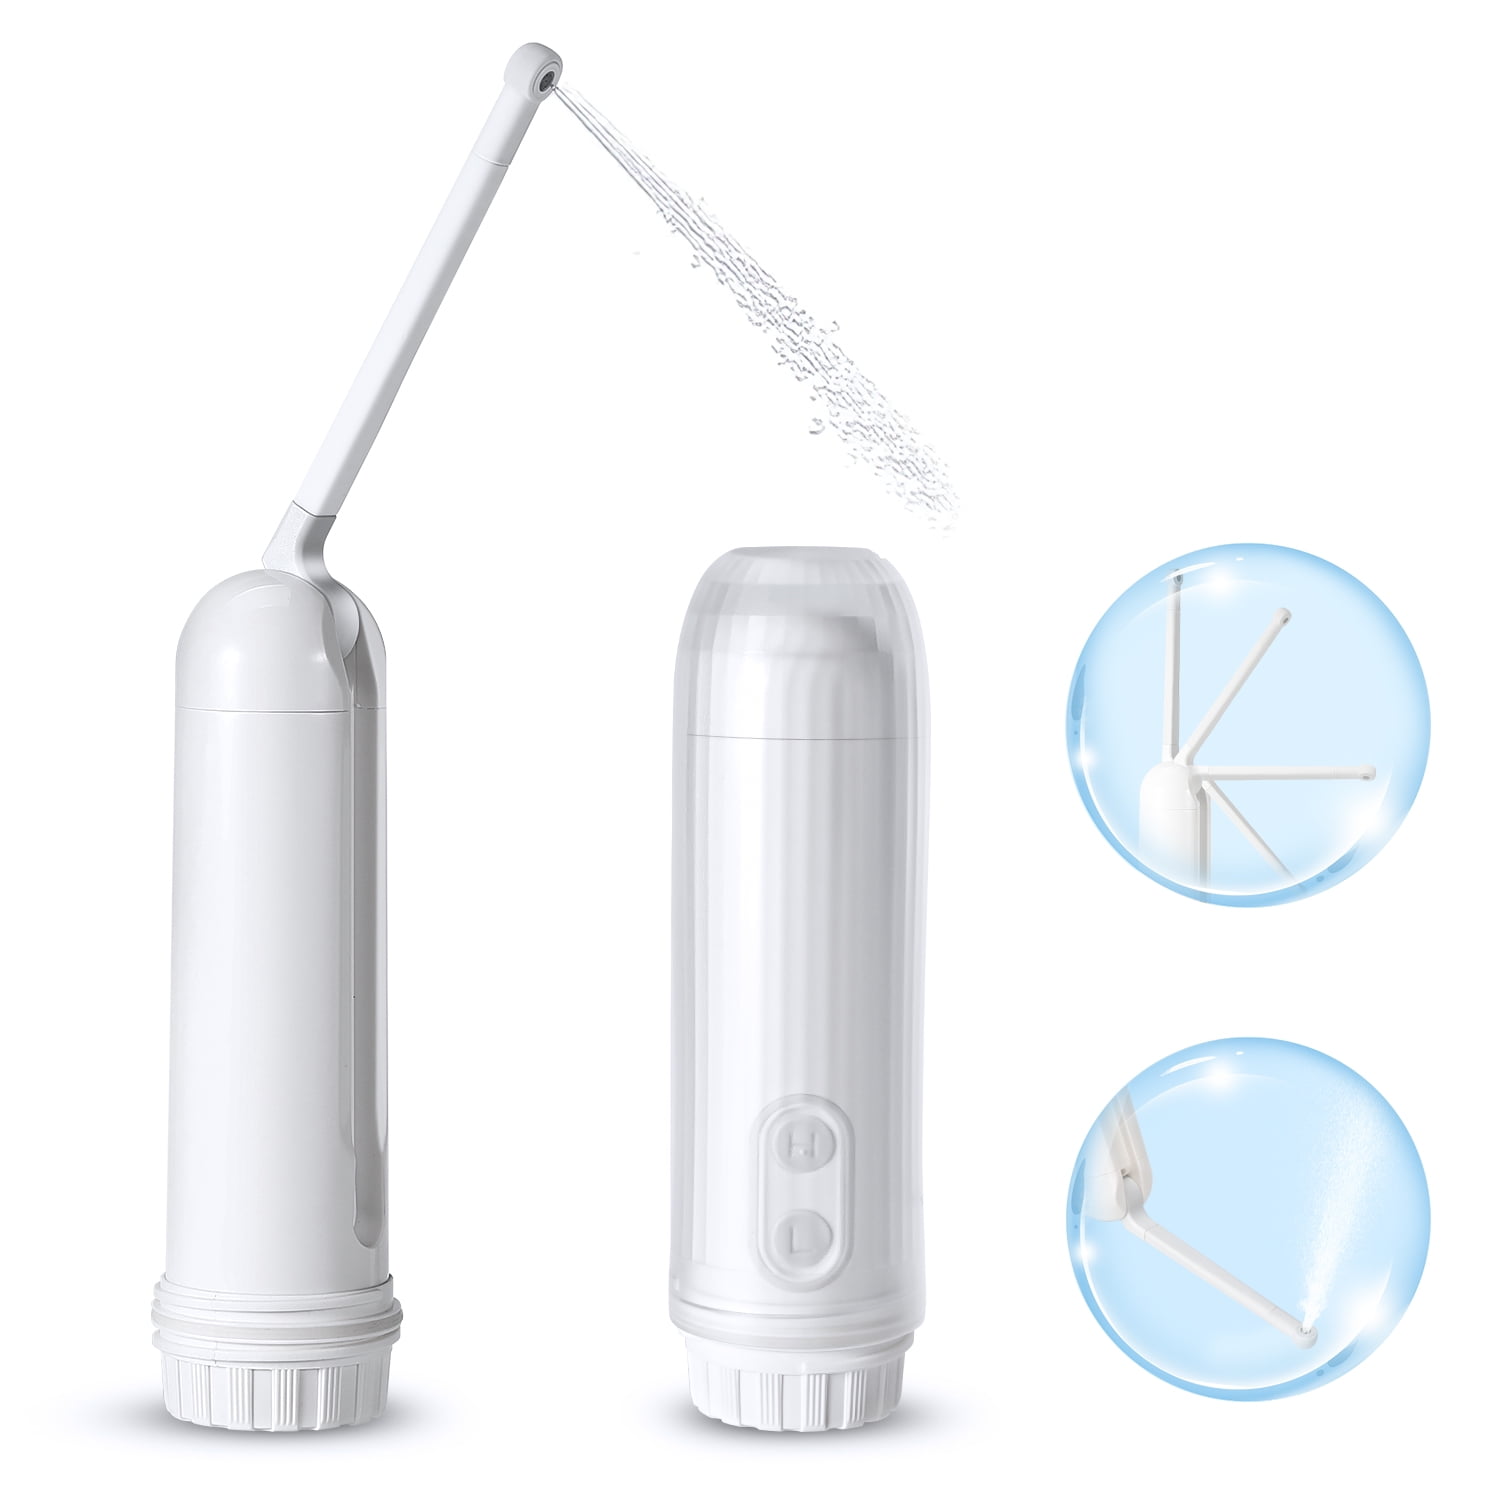 1pc Portable Handheld Bidet Sprayer Personal Hygiene Cleaning Tools Travel Kit 